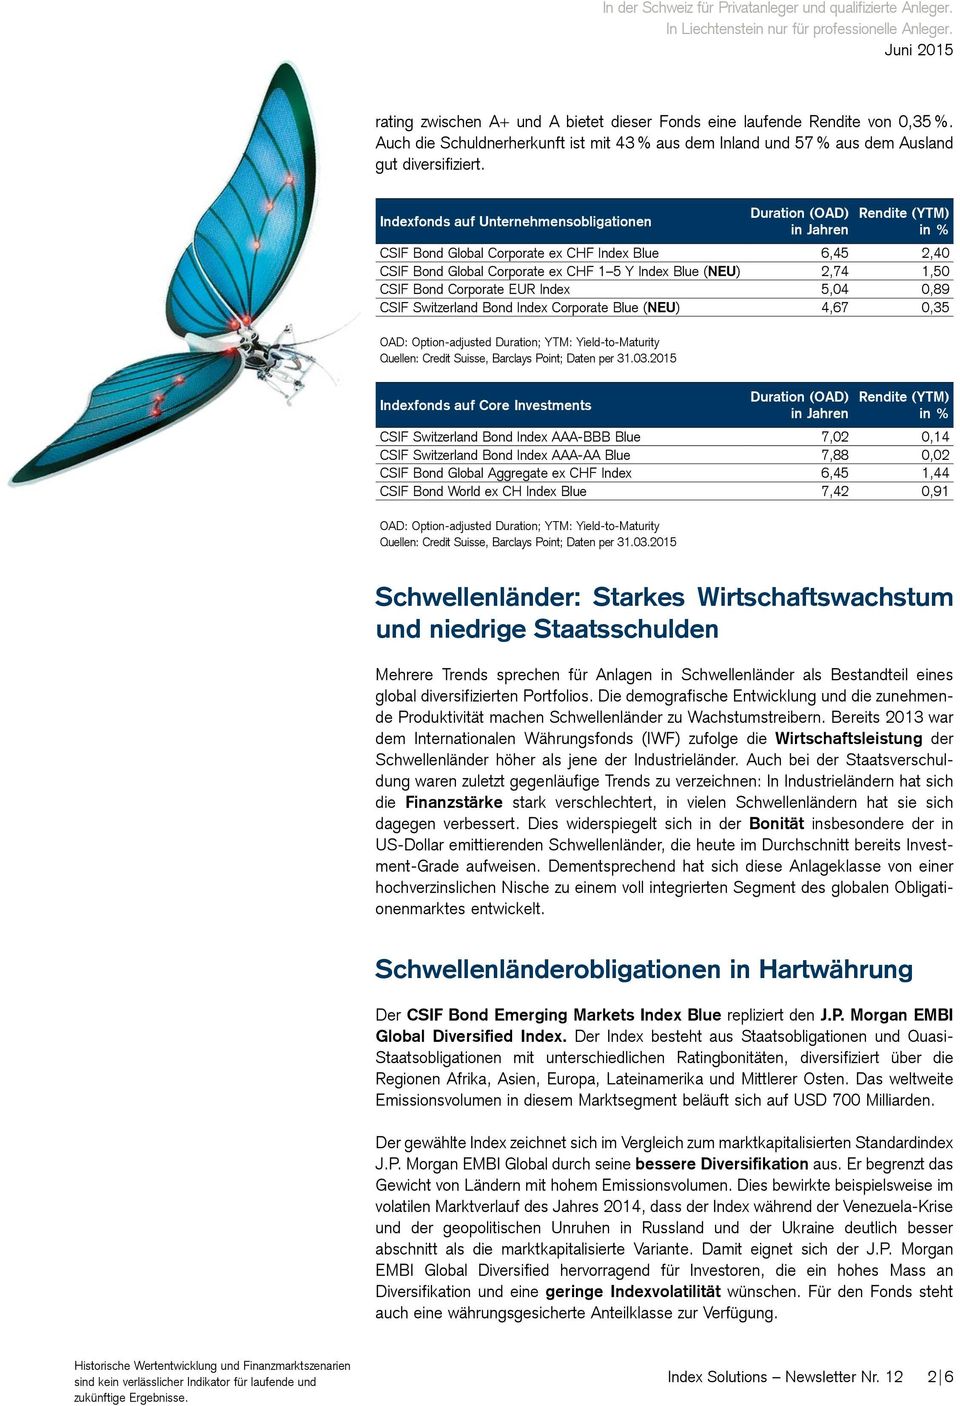 0,89 CSIF Switzerland Bond Index Corporate Blue (NEU) 4,67 0,35 Indexfonds auf Core Investments CSIF Switzerland Bond Index AAA-BBB Blue 7,02 0,14 CSIF Switzerland Bond Index AAA-AA Blue 7,88 0,02